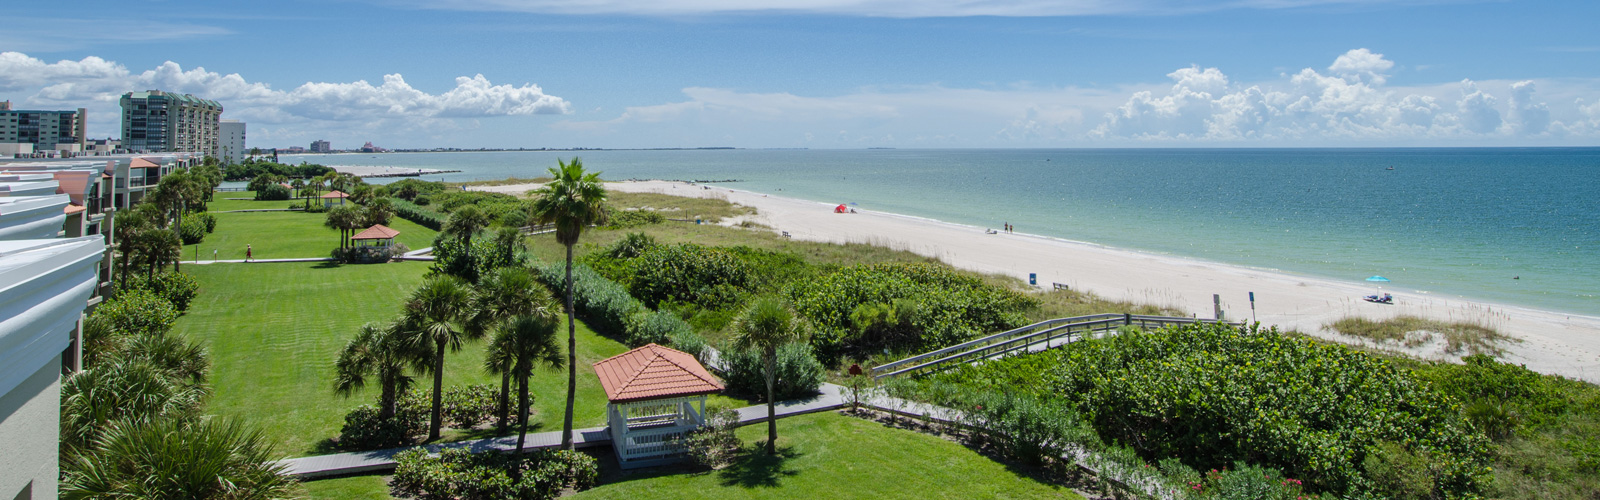 Resort Rentals Vacation Condos On St Pete Beach Florida